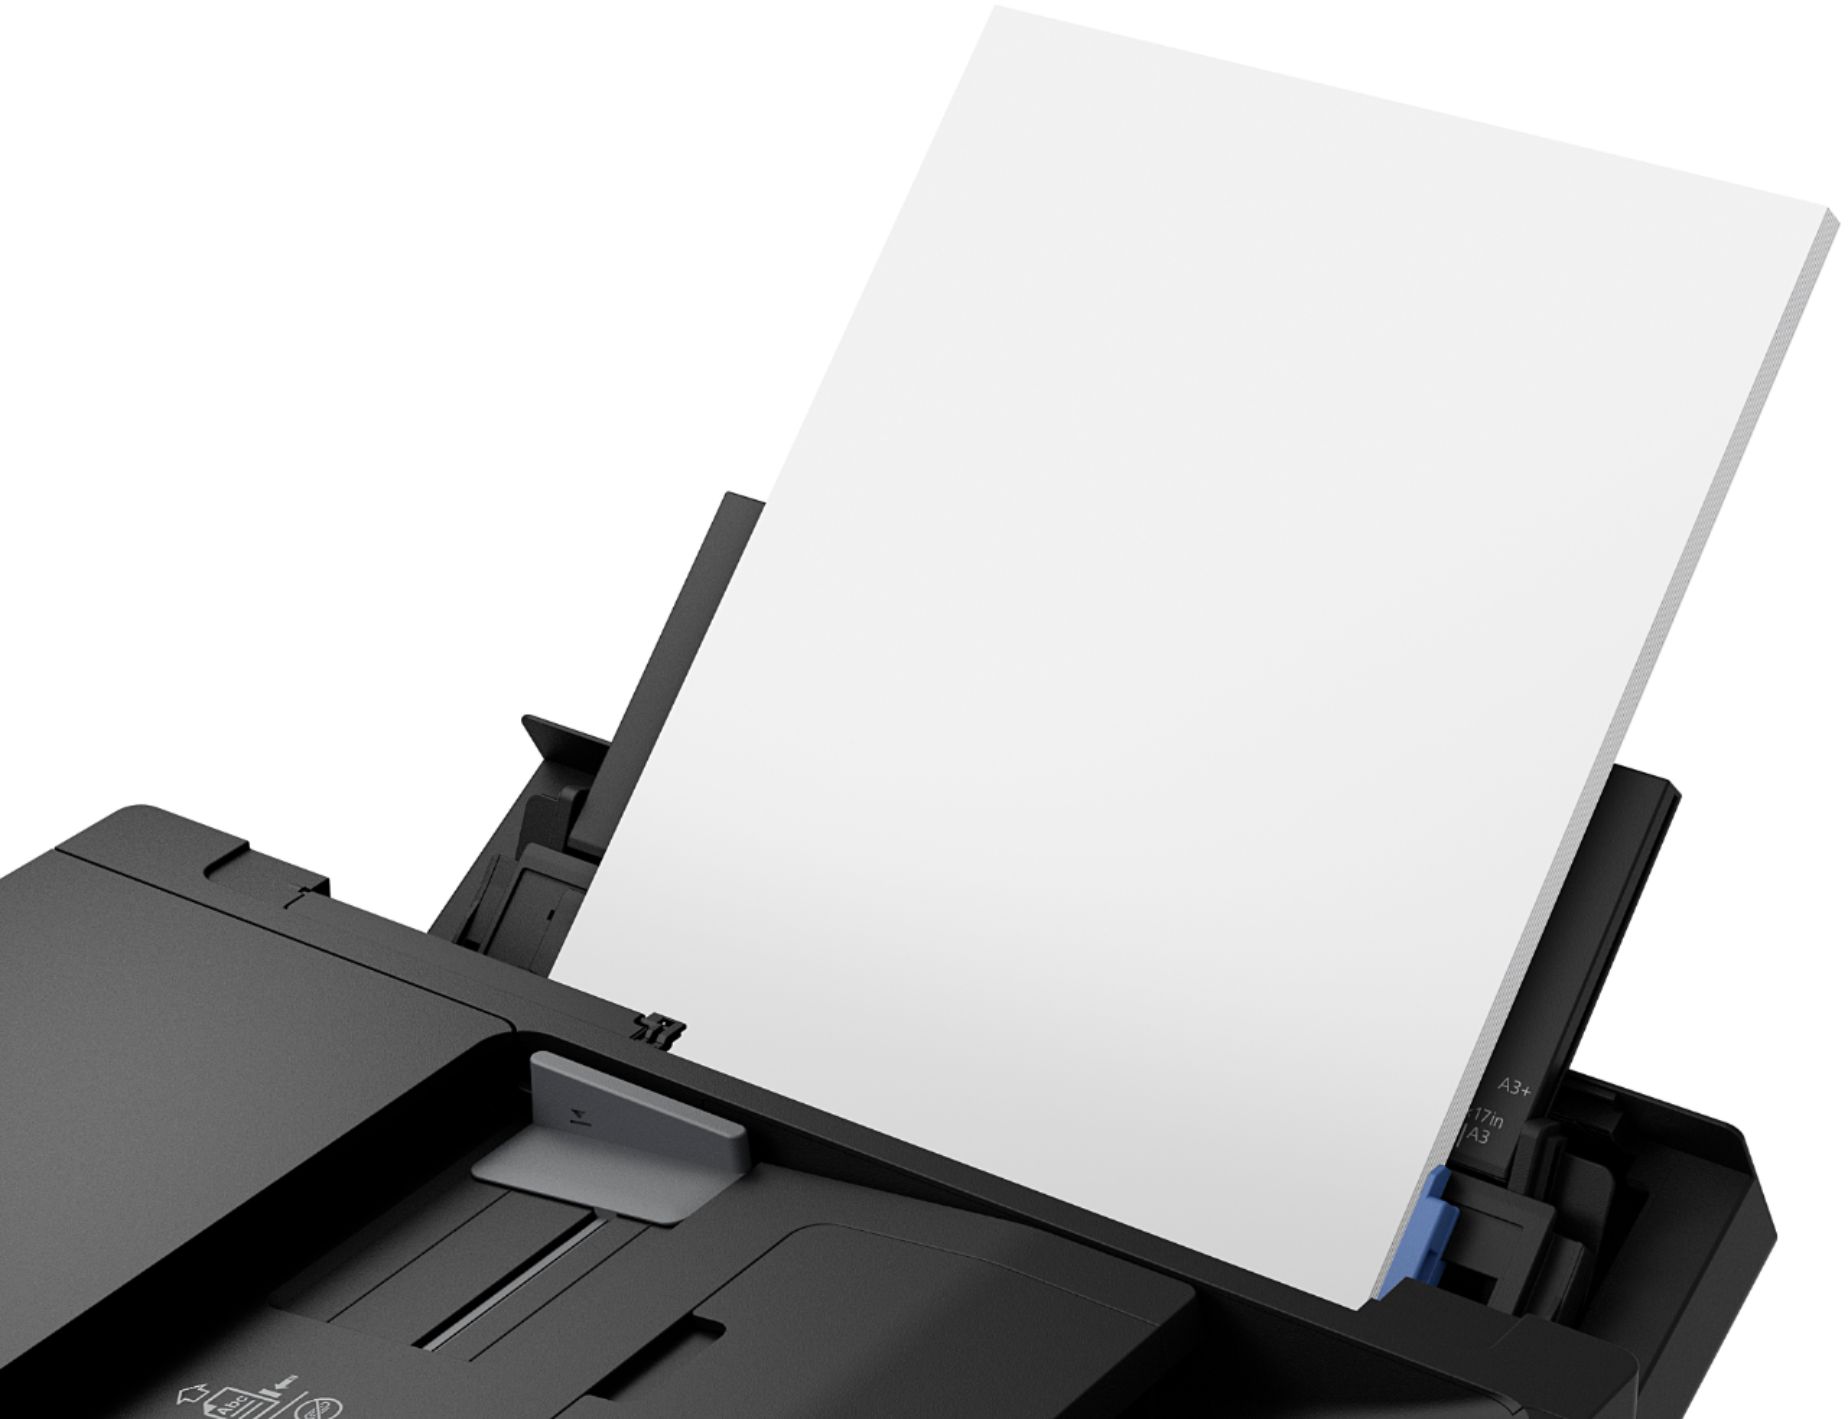 WF-7840 C11CH67201 Best Wide-format Printer Pro All-in-One Buy - Epson WorkForce Wireless